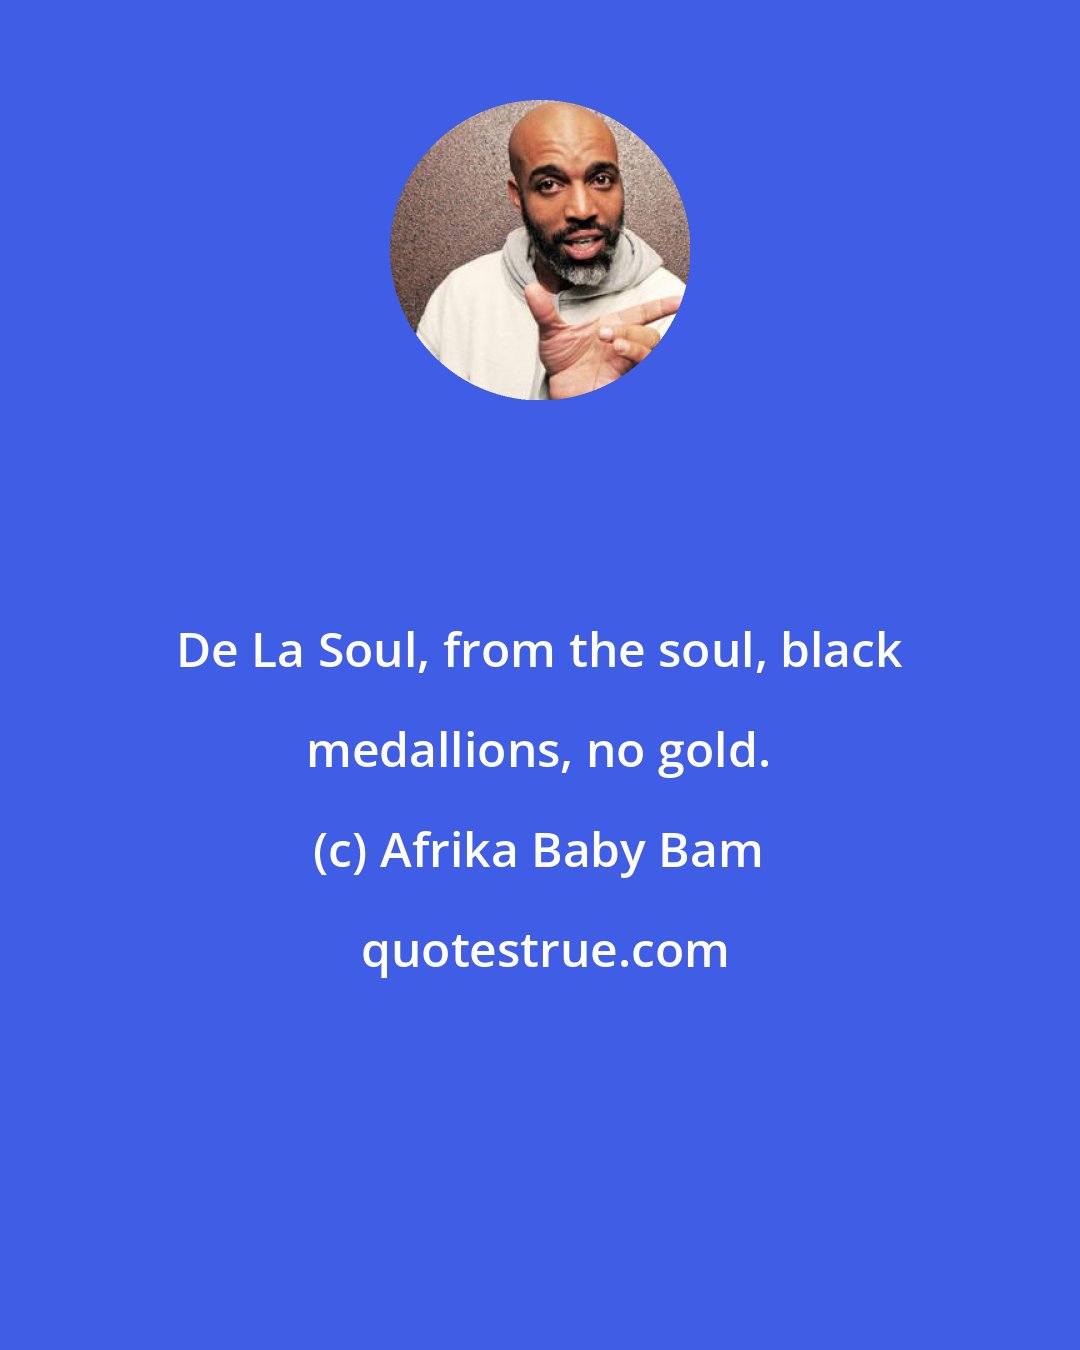 Afrika Baby Bam: De La Soul, from the soul, black medallions, no gold.